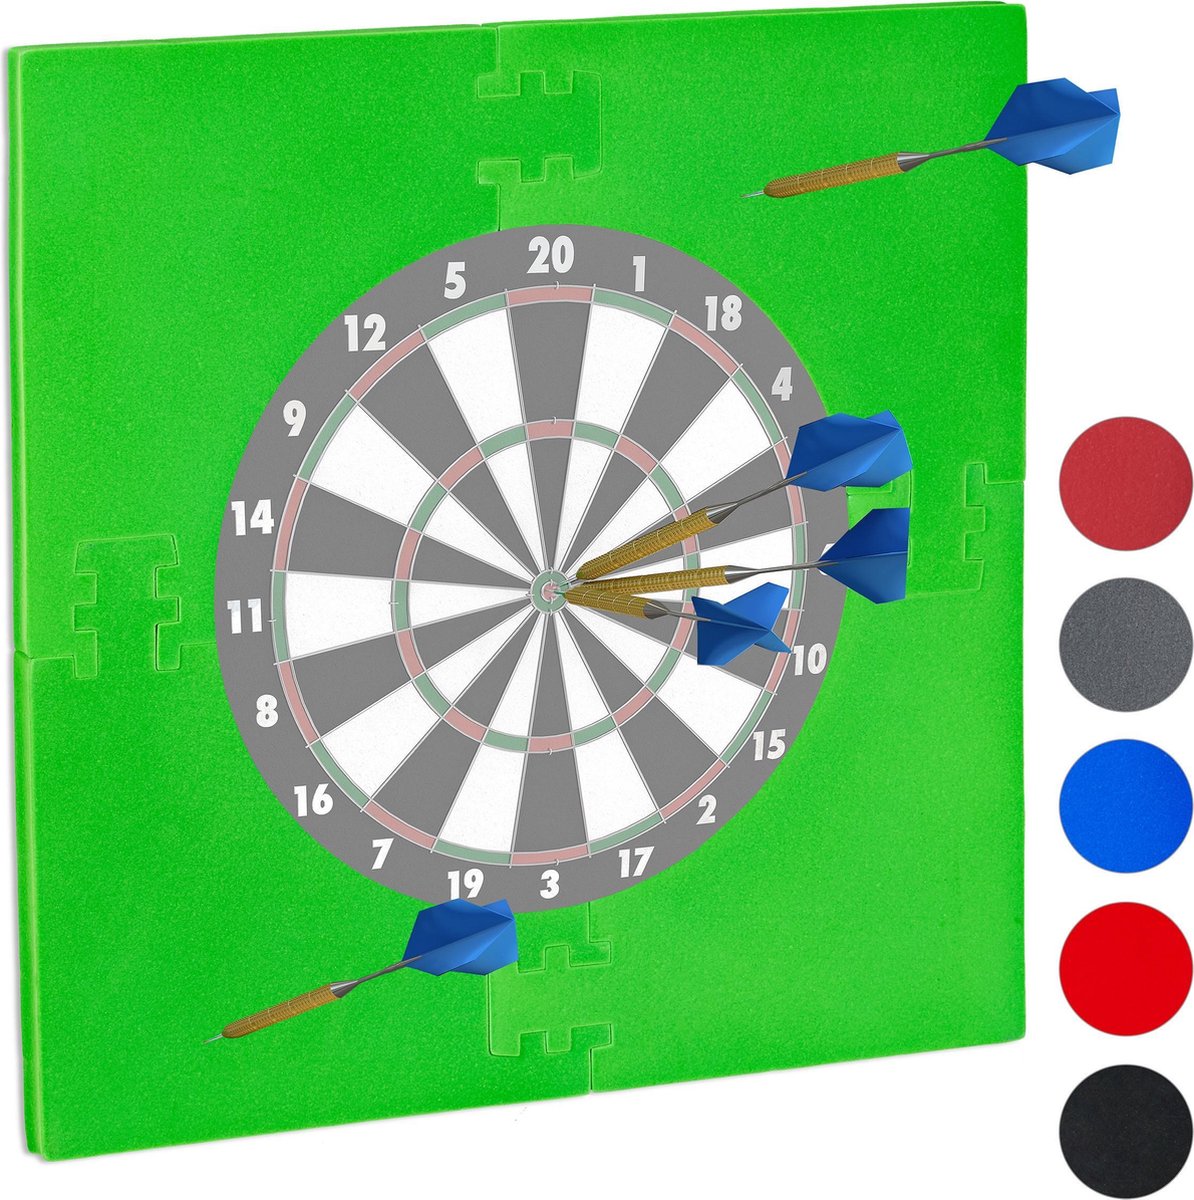 Relaxdays dartbord surround ring - beschermrand - beschermring - ring voor dartbord - 45cm - groen